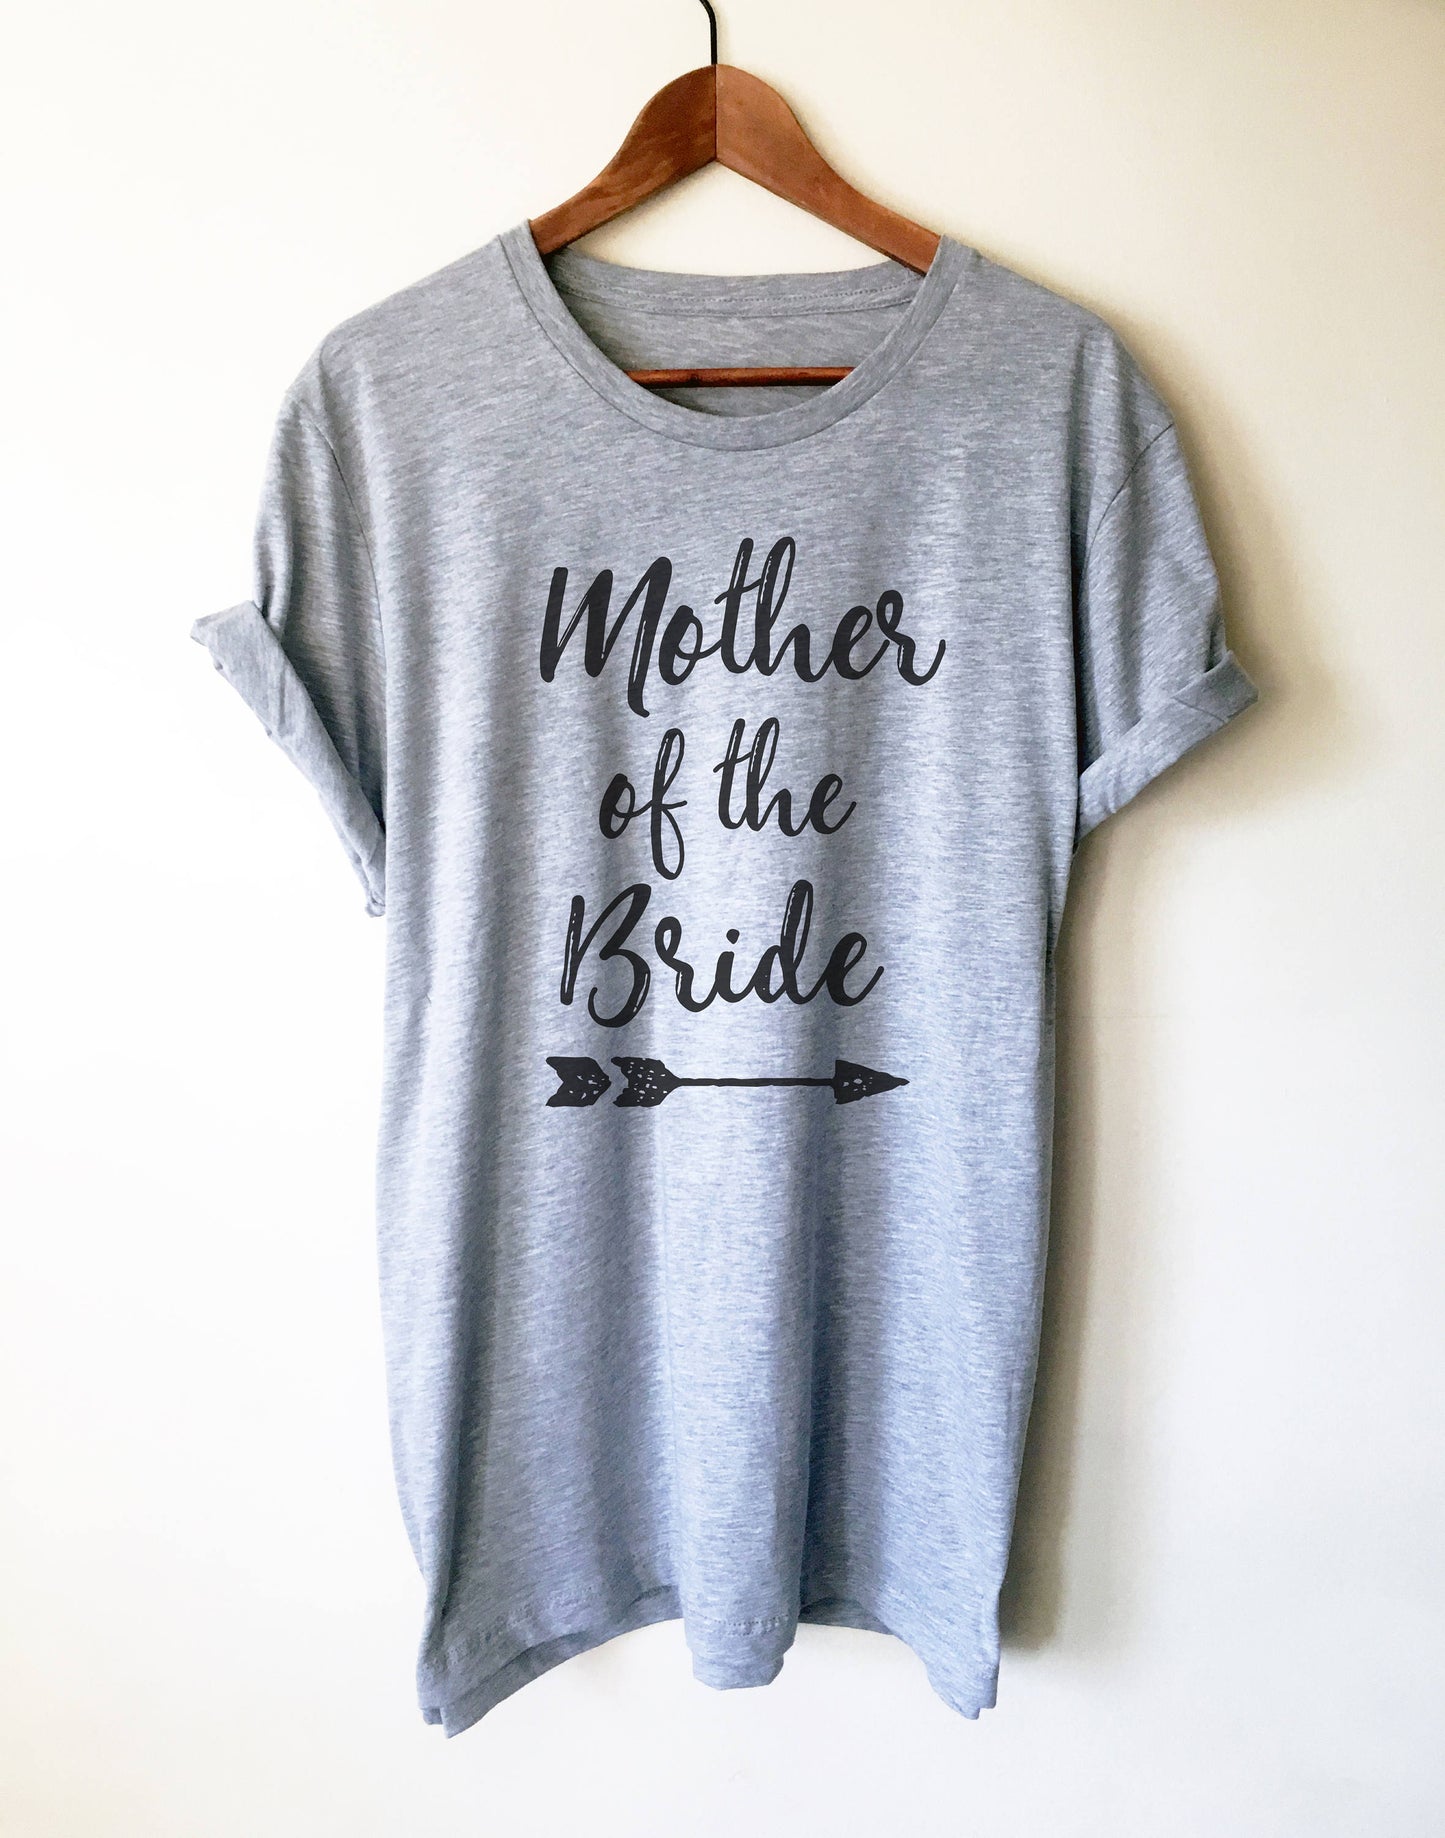 Mother Of The Bride Unisex Shirt - Bachelorette party, Bride shirt, Bachelorette shirts, Wedding shirt, Engagement shirt, Bridal shower gift